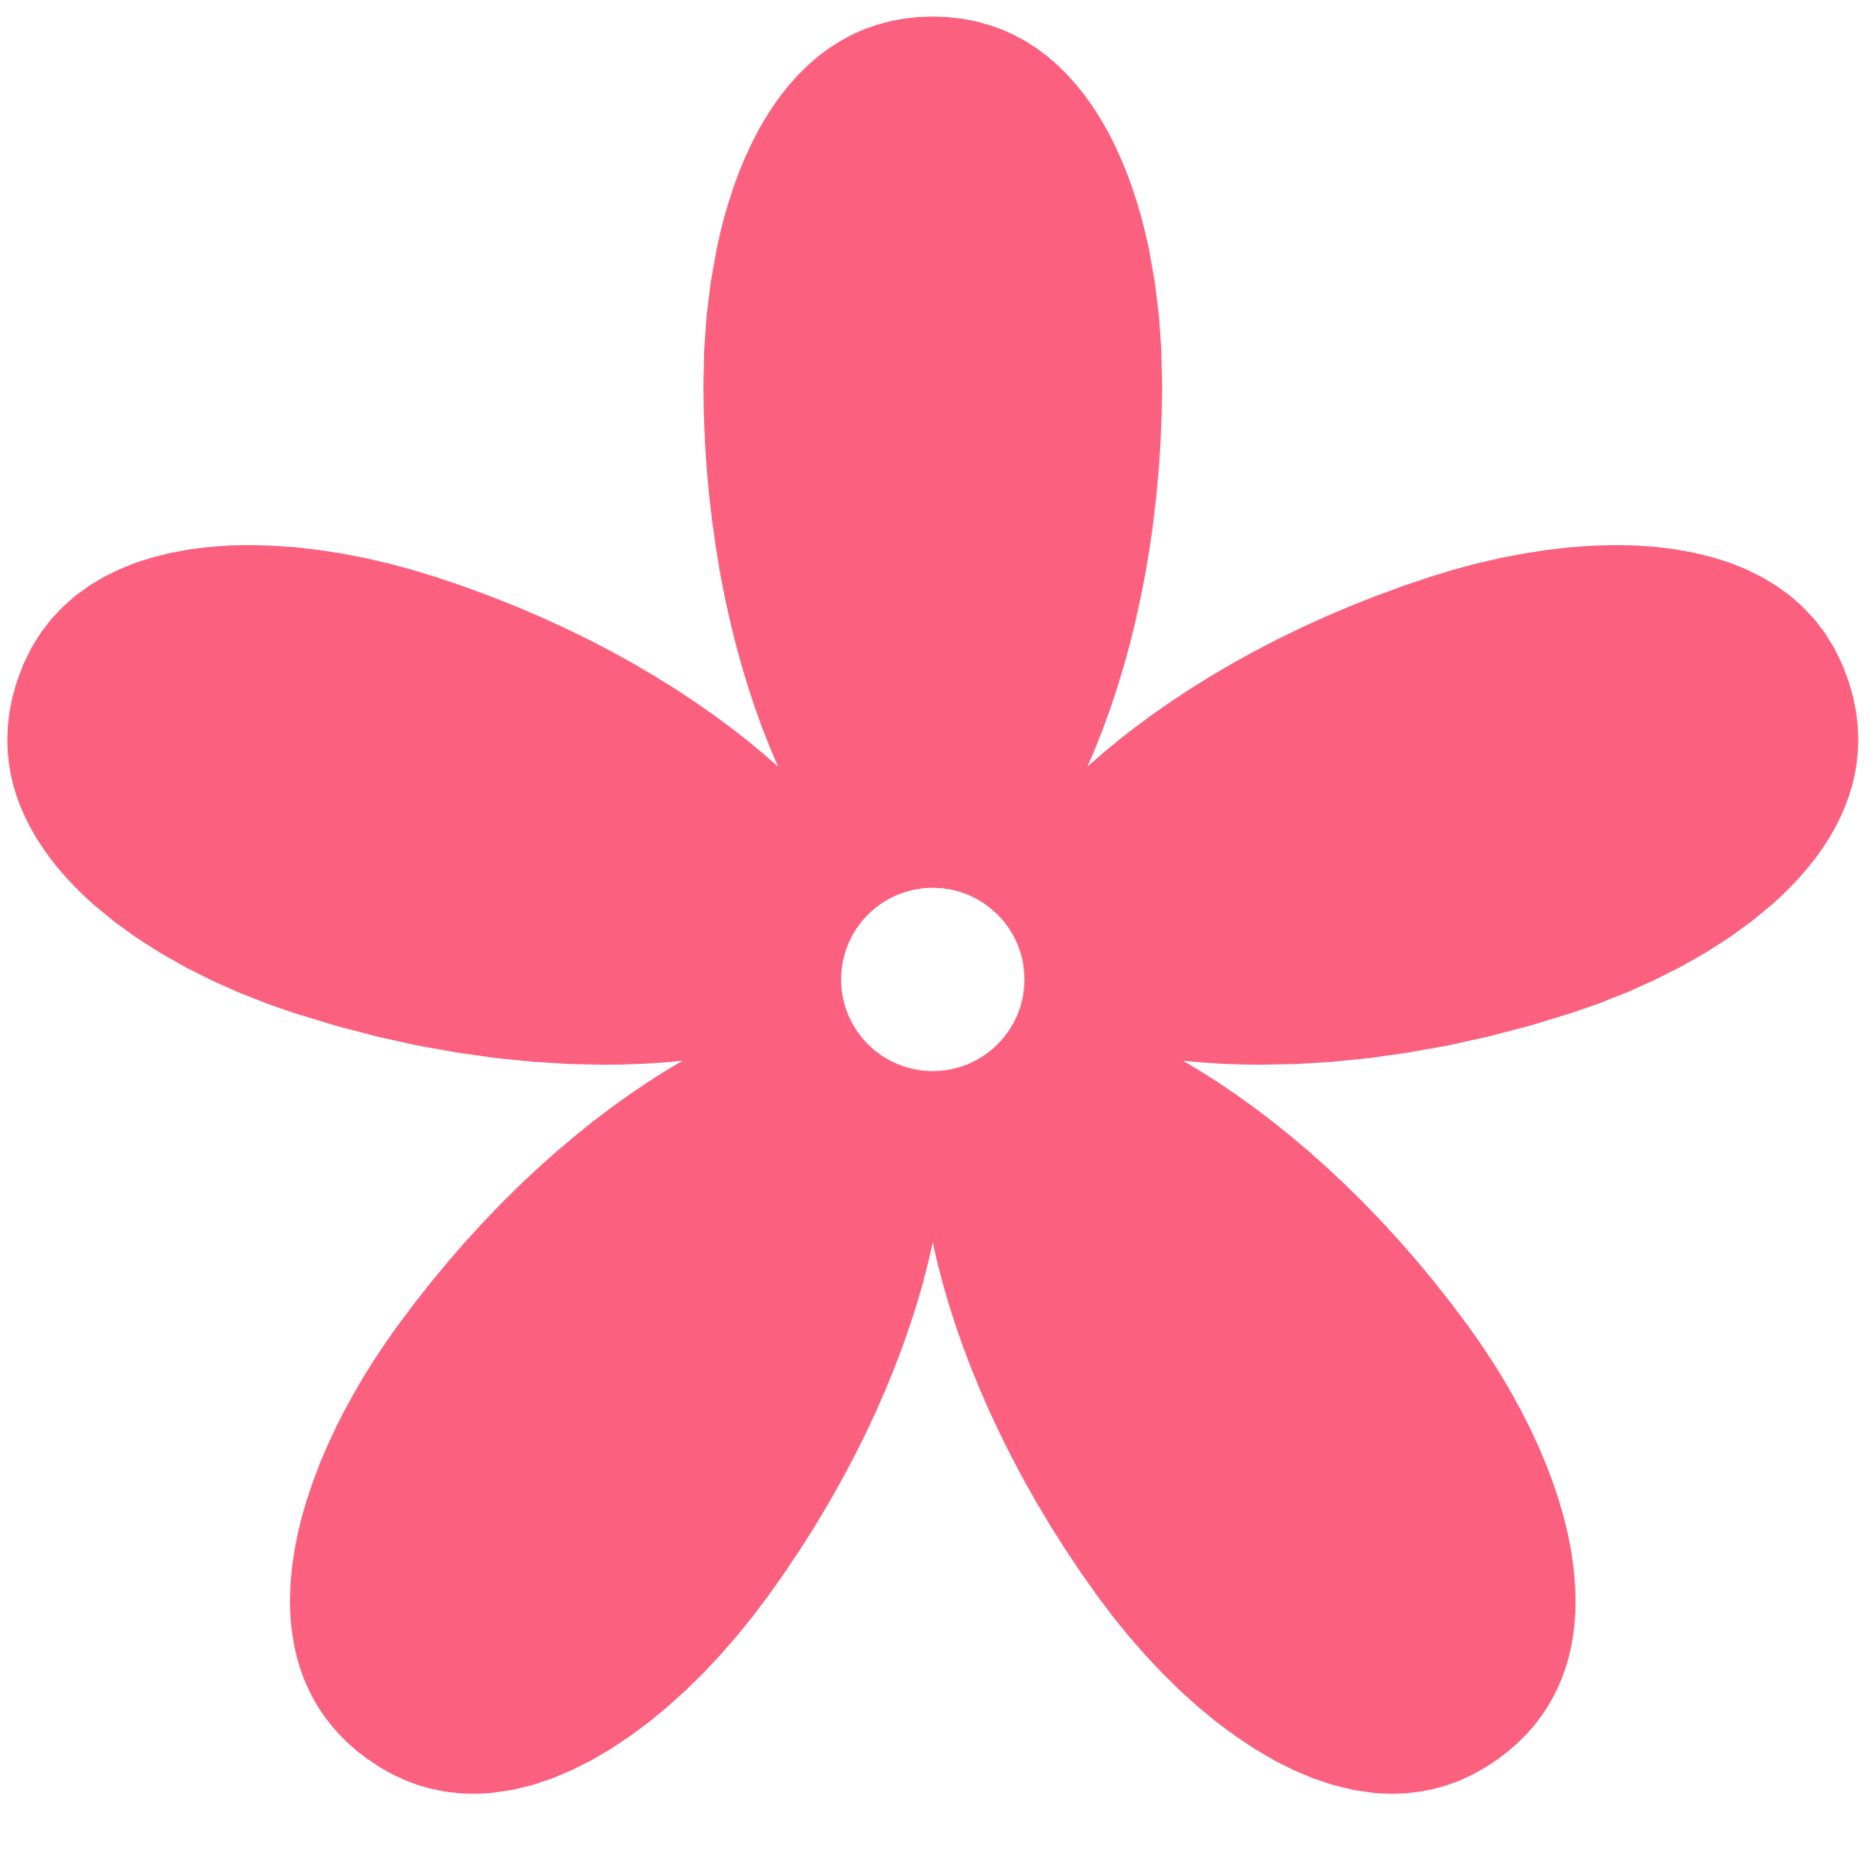 Light pink flower clipart - Clipground